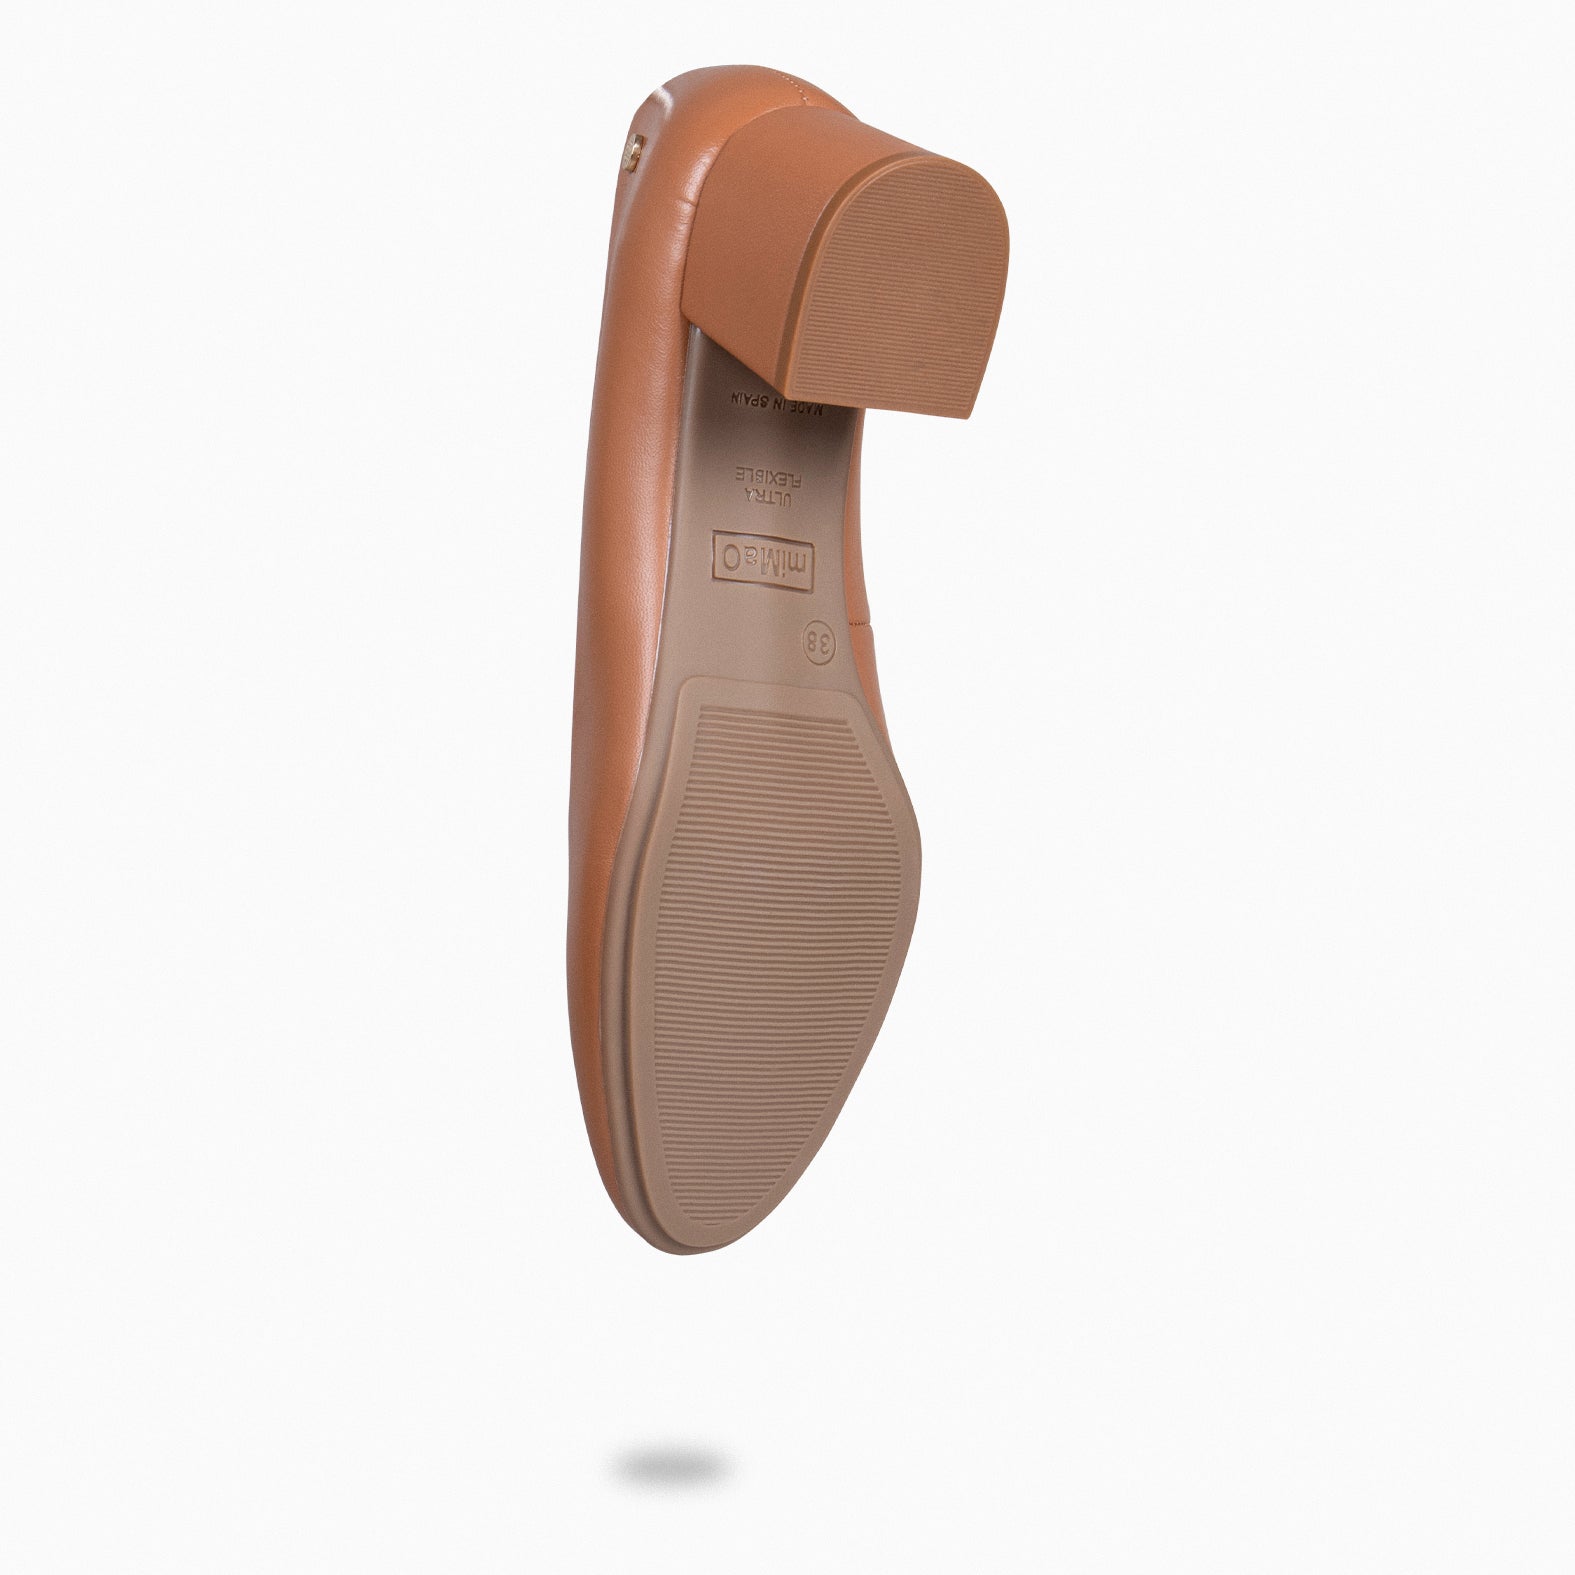 URBAN ROUND – CAMEL nappa leather low heels